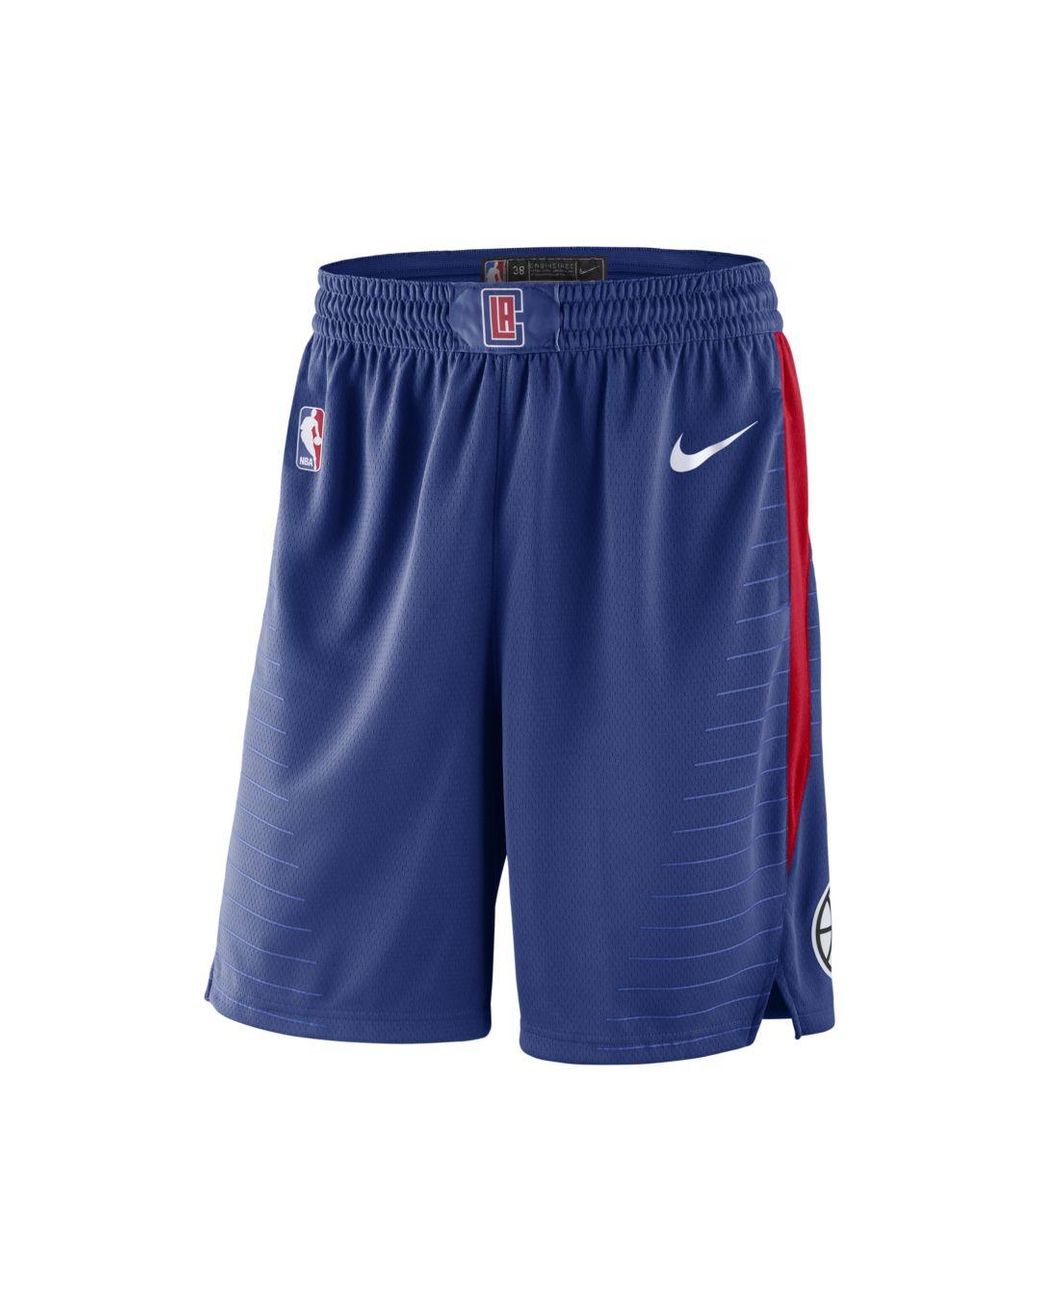 Nike La Clippers Icon Edition Swingman Nba Shorts in Blue for Men - Lyst